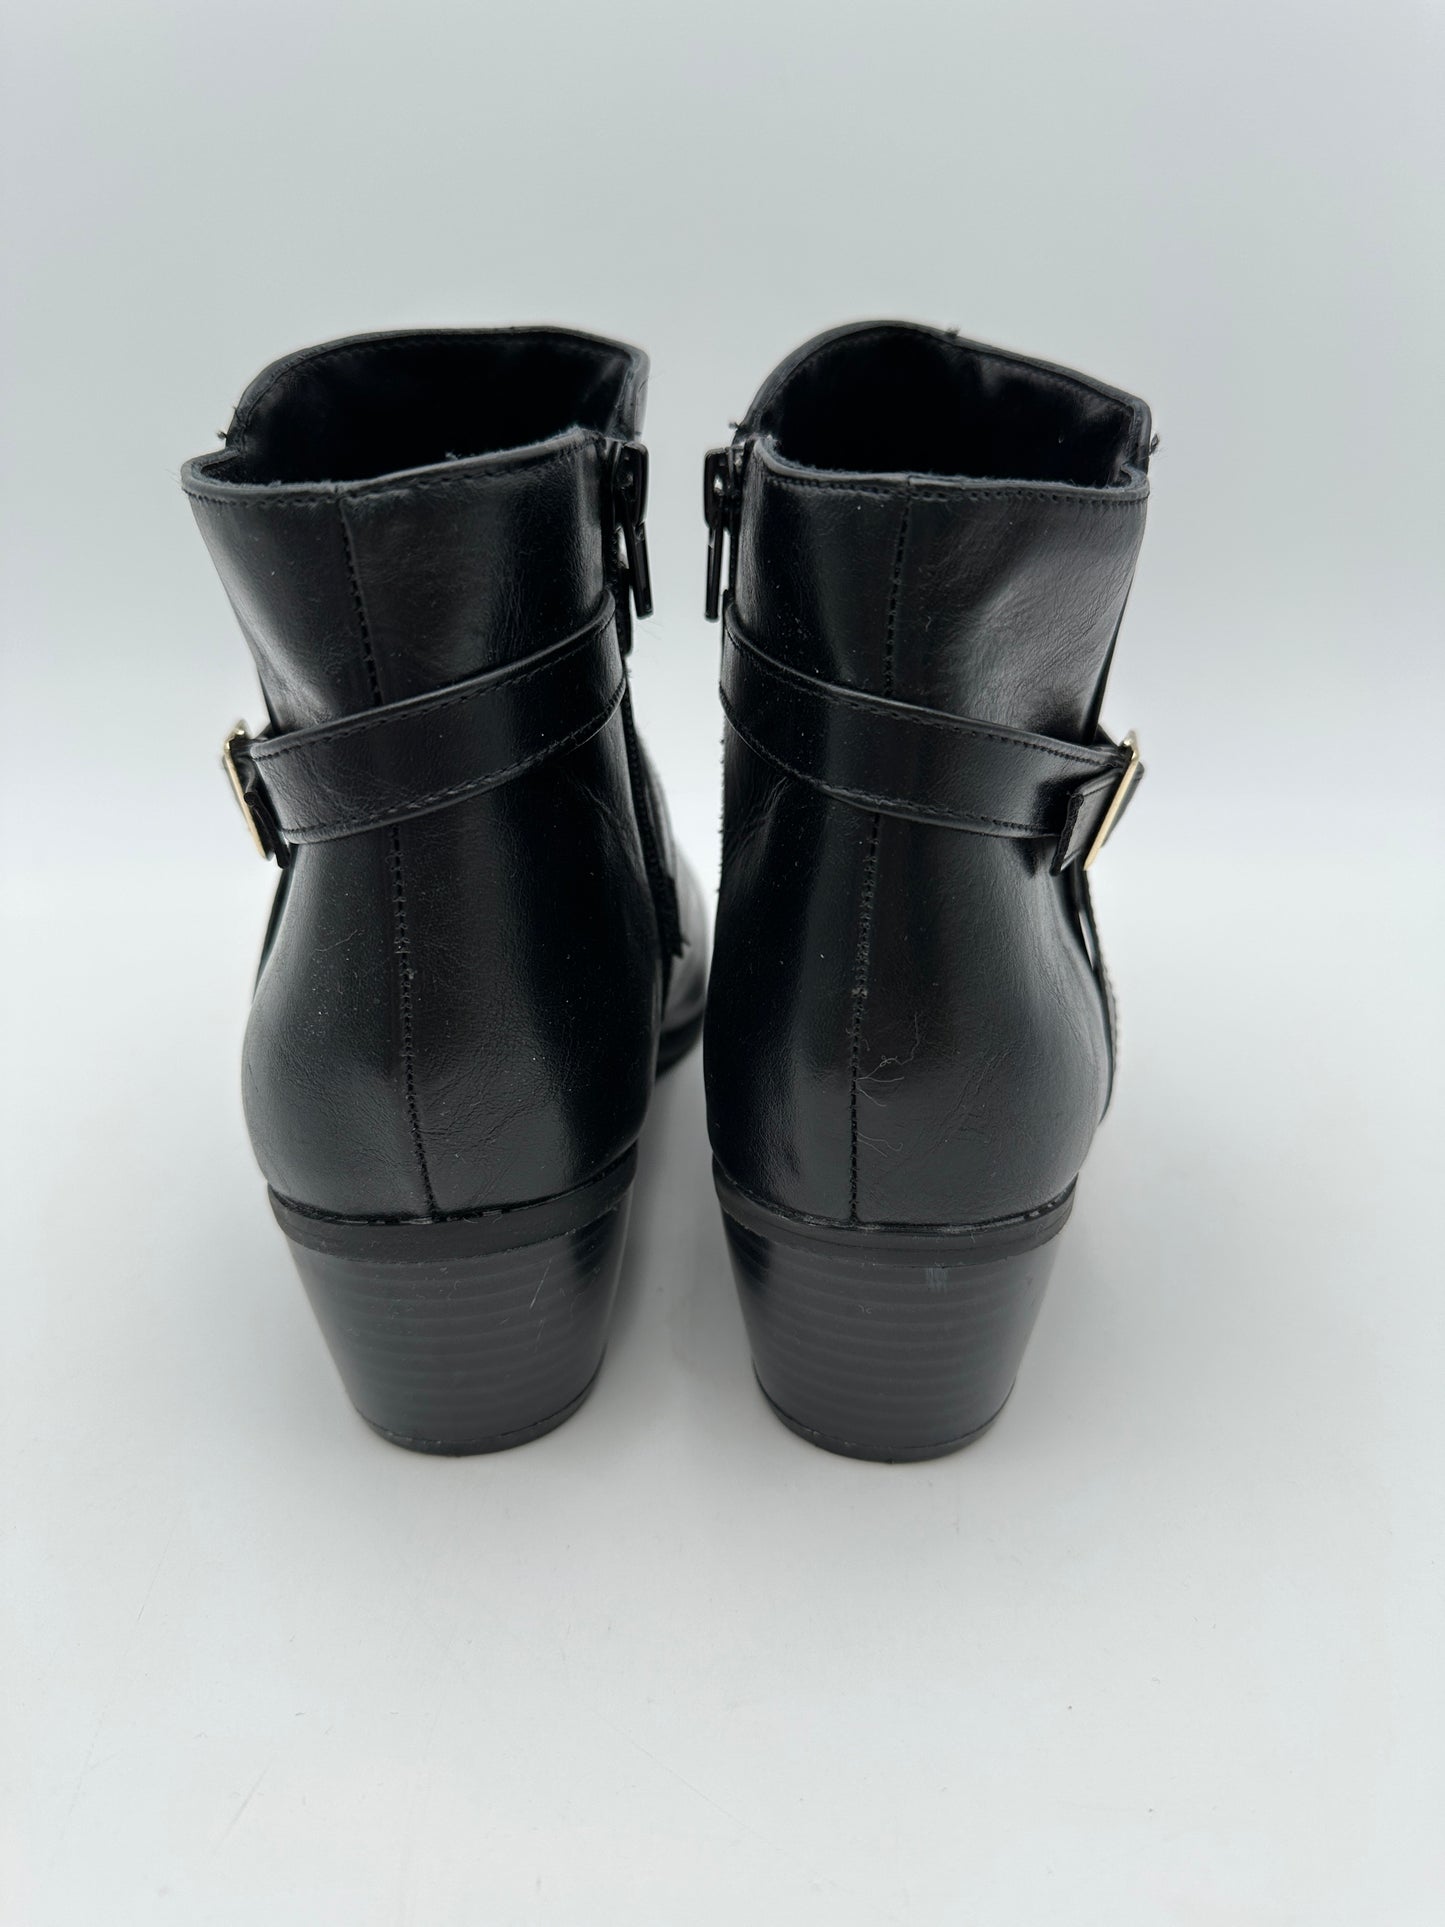 London Fog Size 10M Black LFW-Halifax Ankle Boots Booties, 2" heel